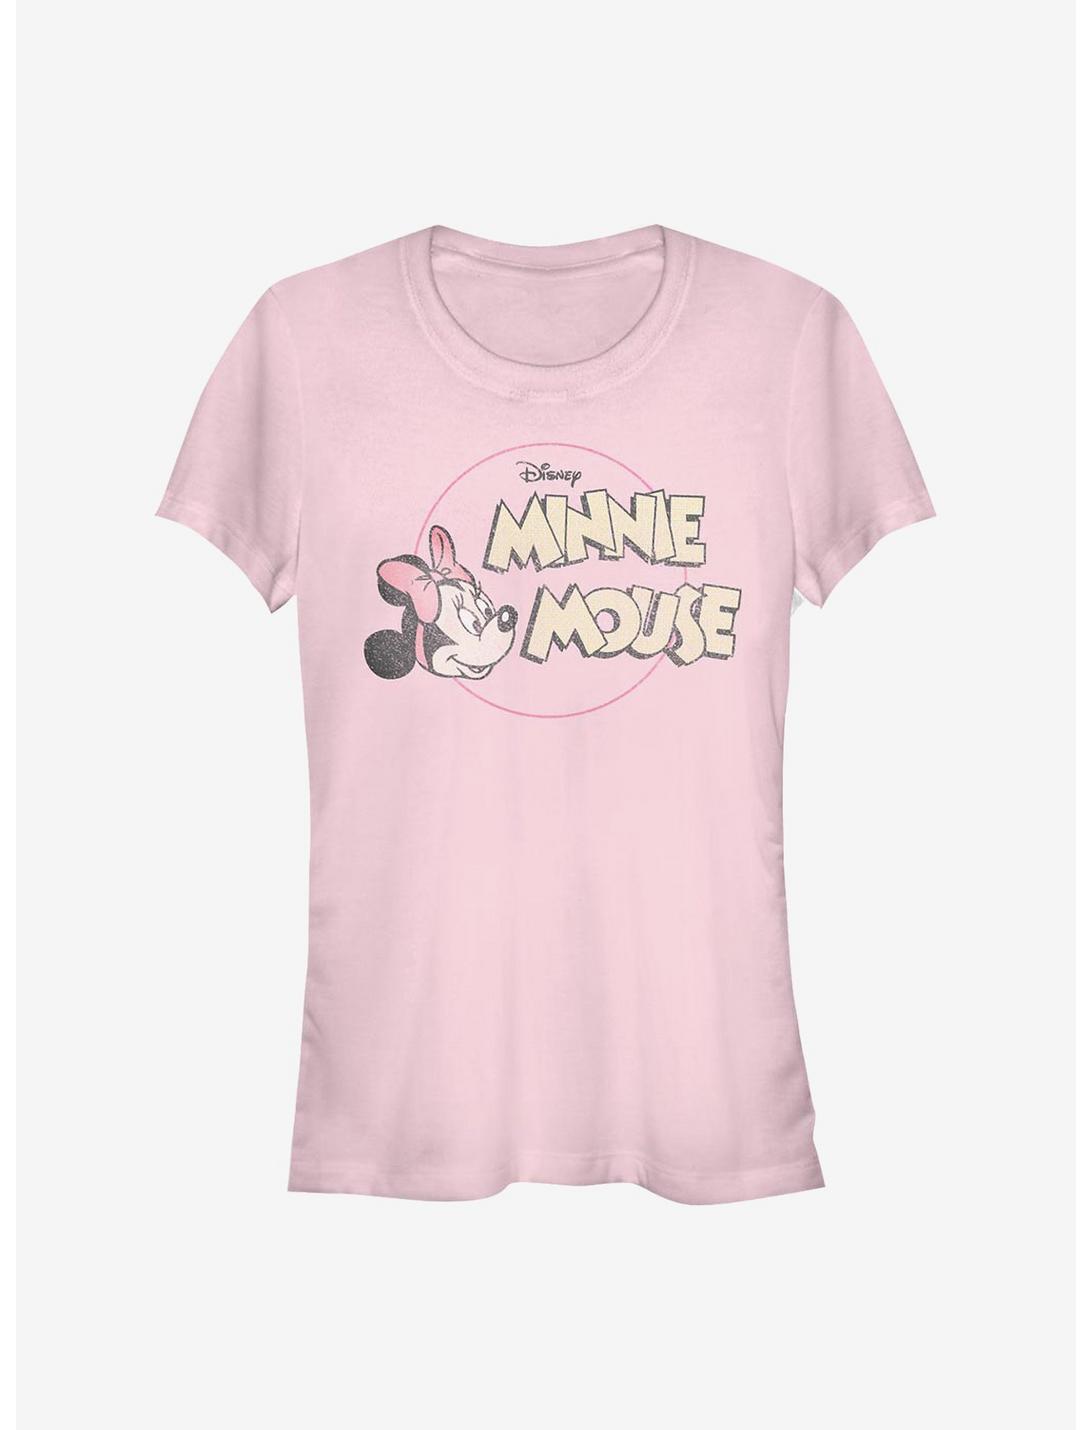 Disney Minnie Mouse Retro Minnie Girls T-Shirt, LIGHT PINK, hi-res